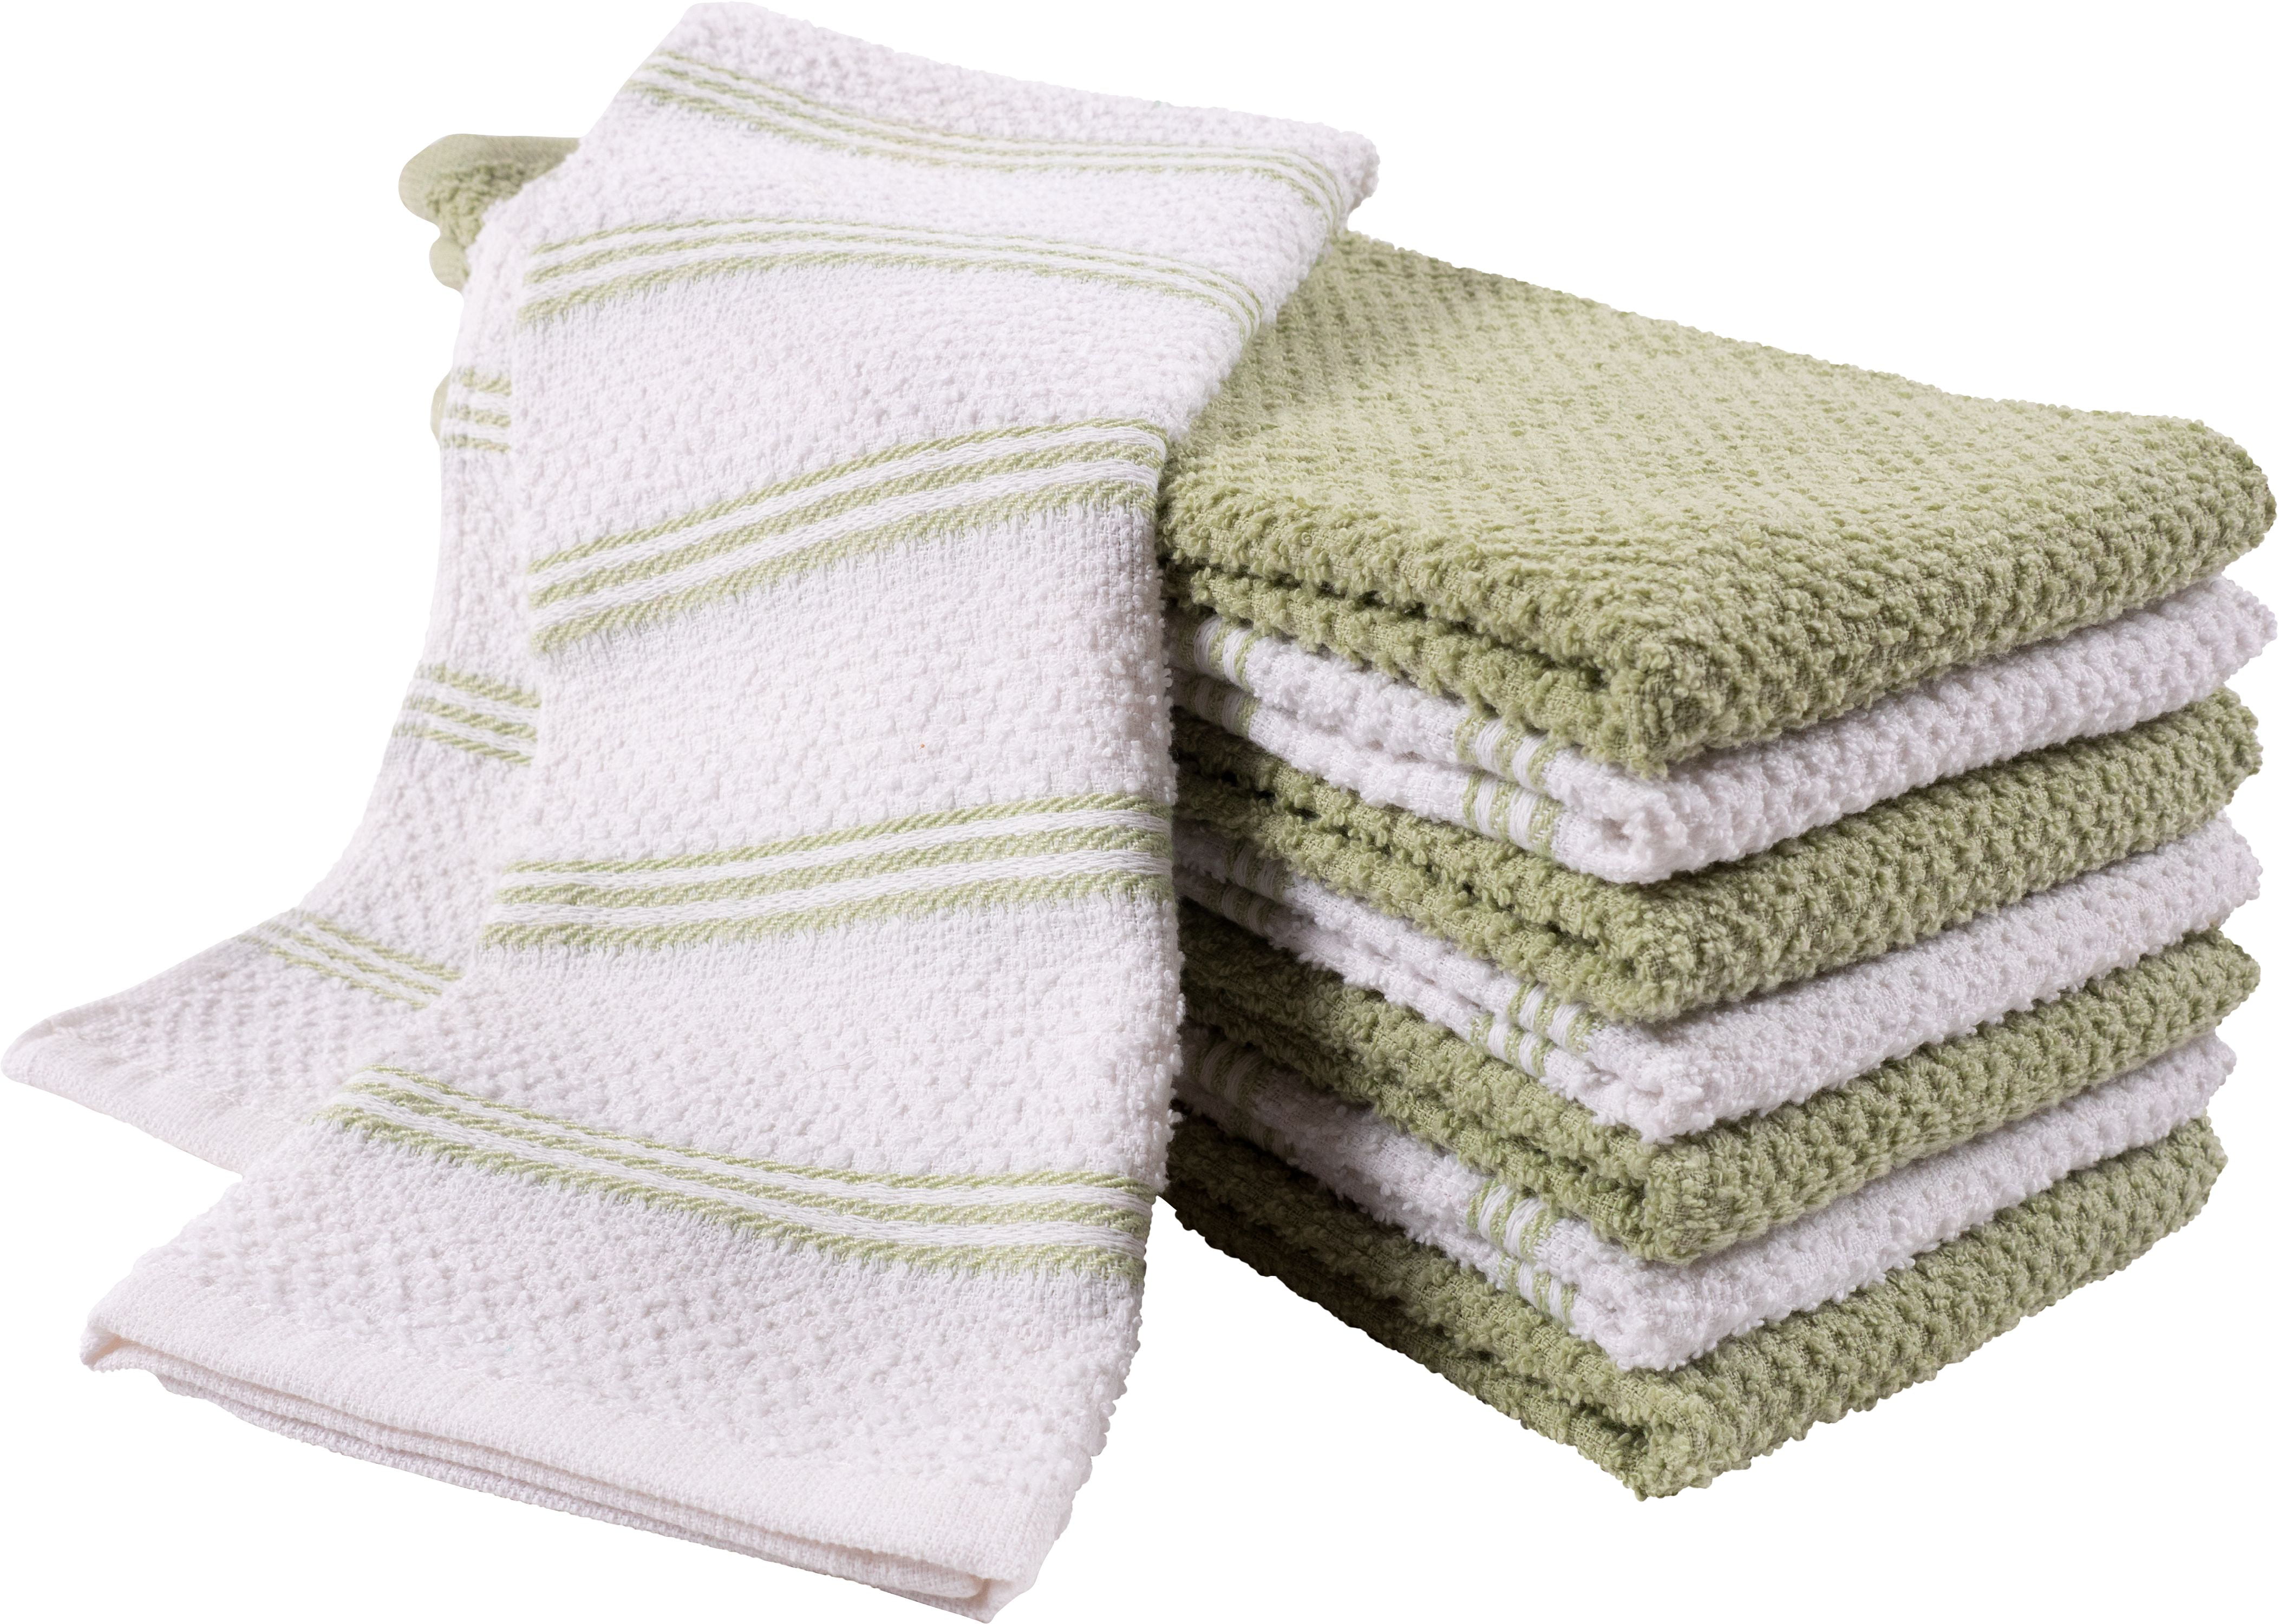 COTTON CRAFT Amazing Kitchen Towels - Set of 8 Terry Towel - 100% Cotton  Euro Café Waffle Weave Dish Towel Set - Soft Absorbent Quick Dry Low Lint